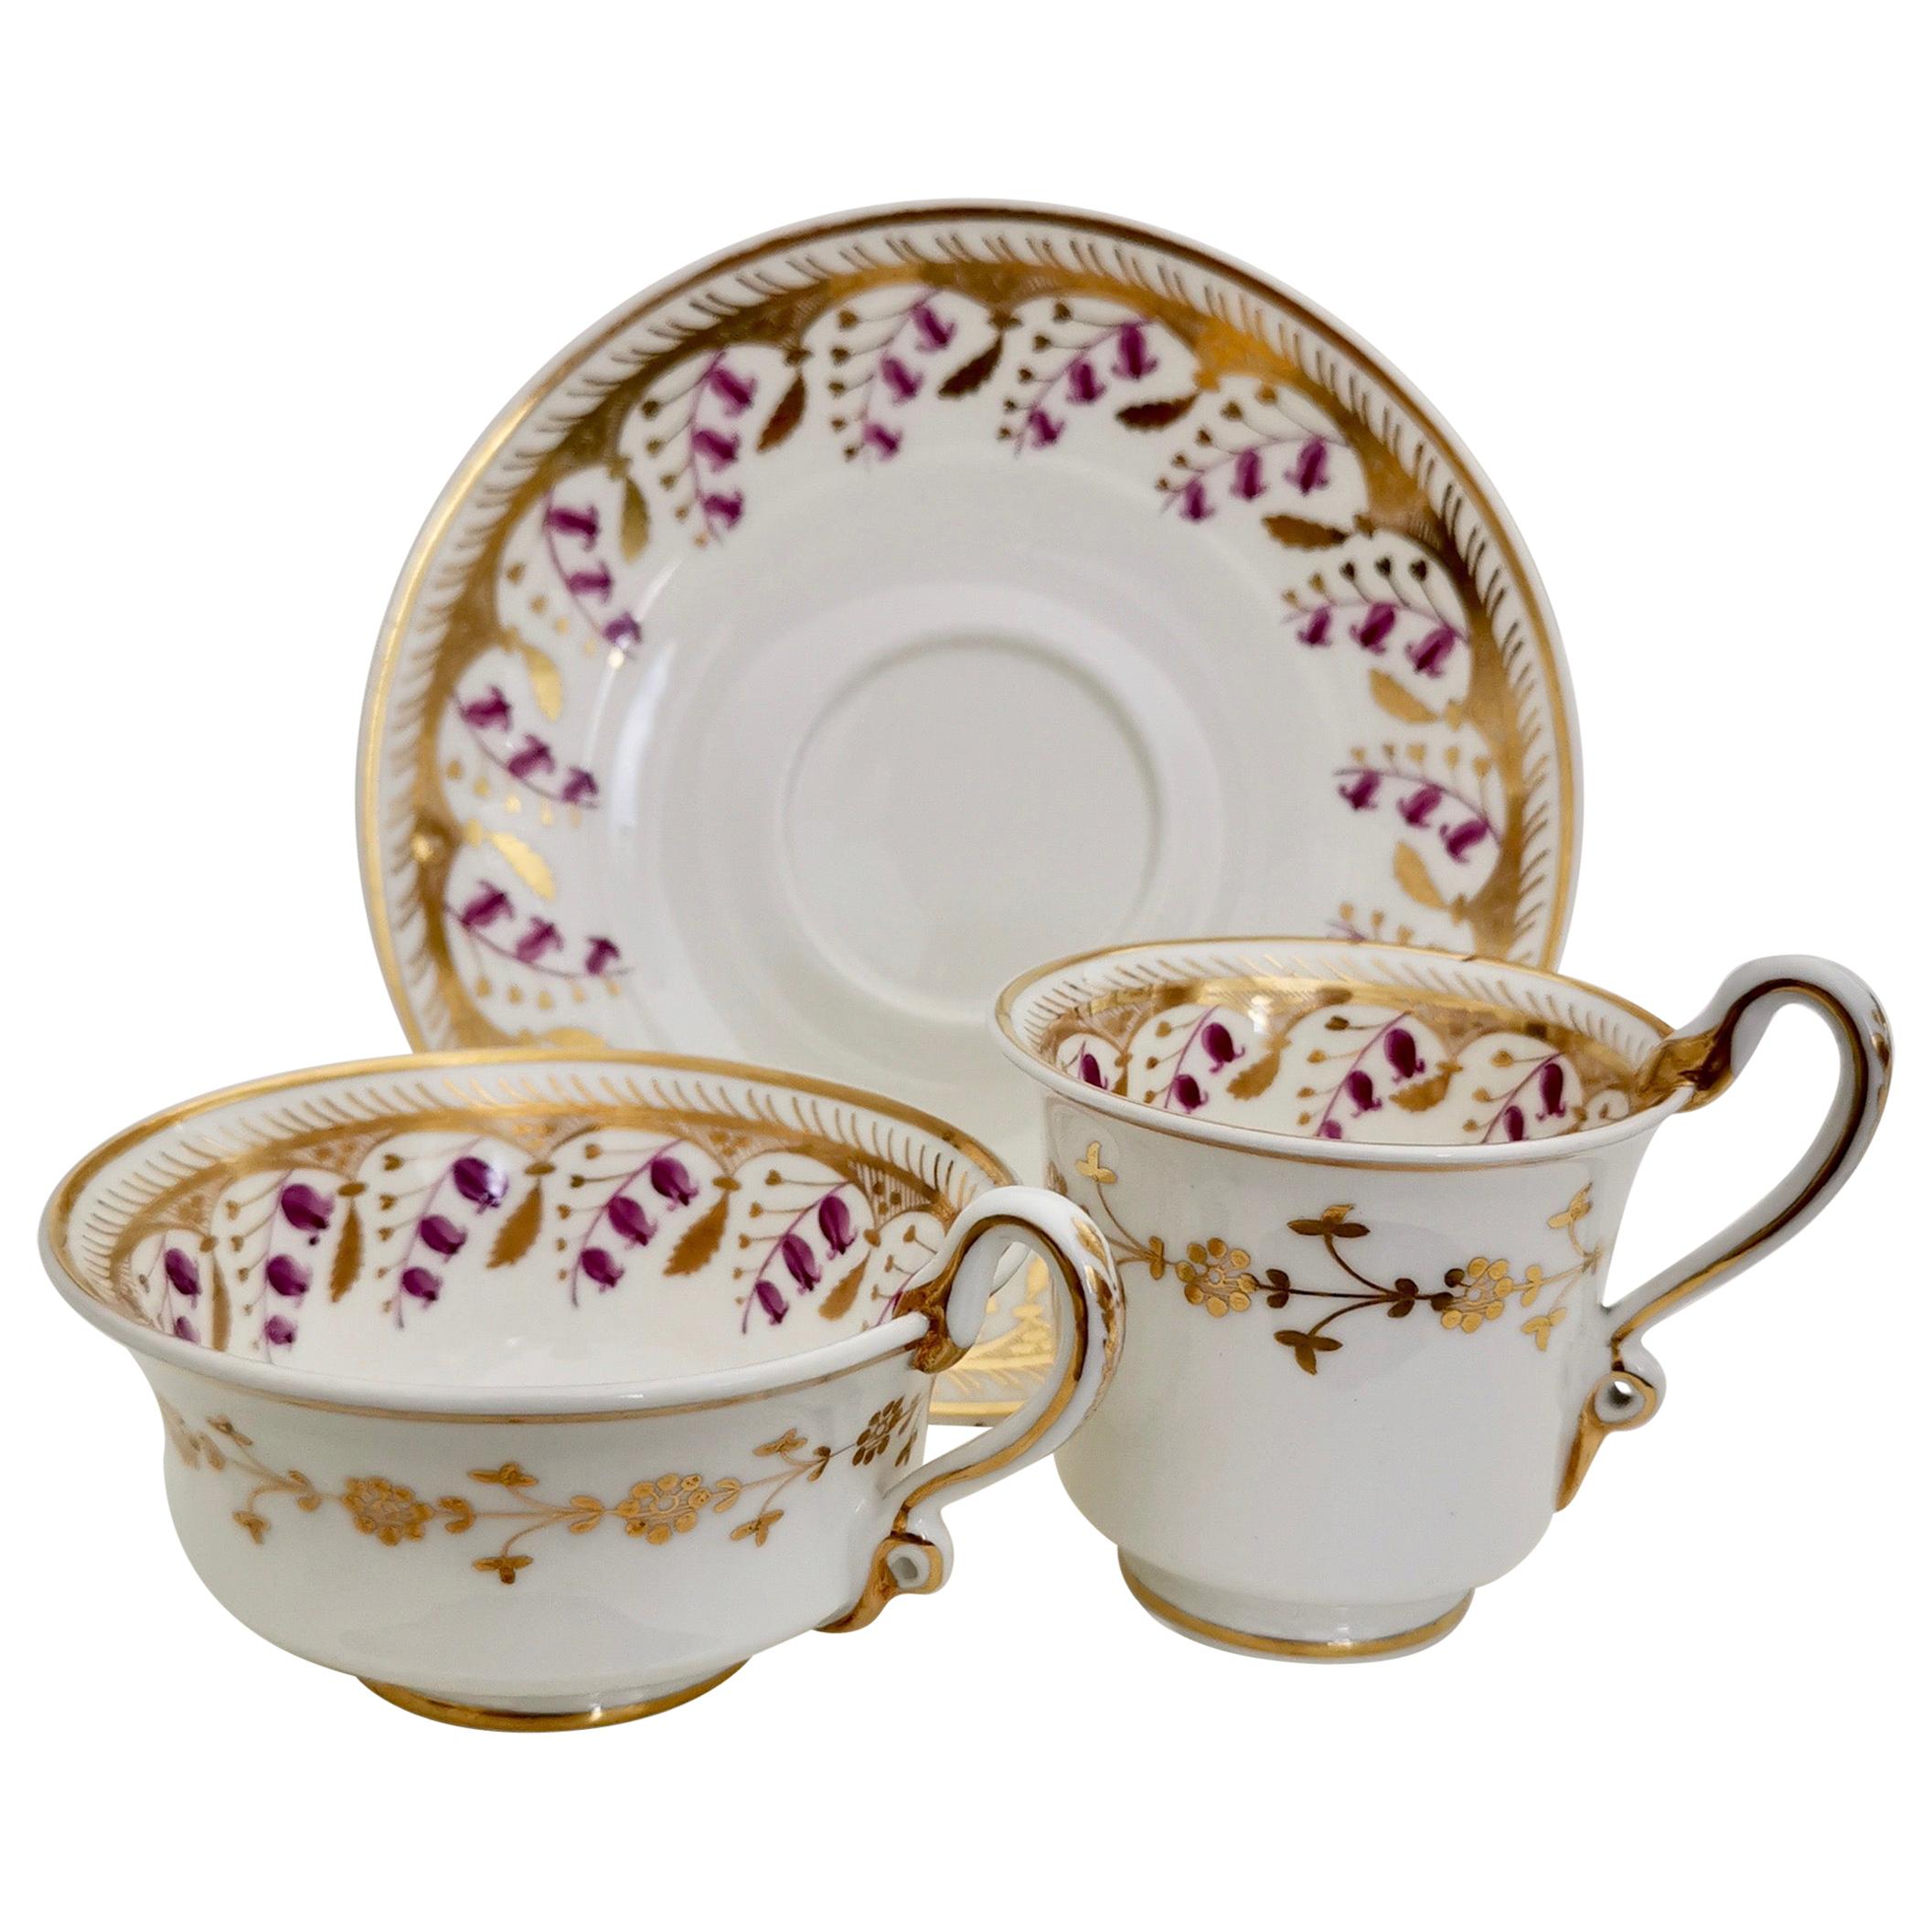 Spode Felspar Porcelain Teacup Trio, White with Harebell Pattern, Regency, 1826